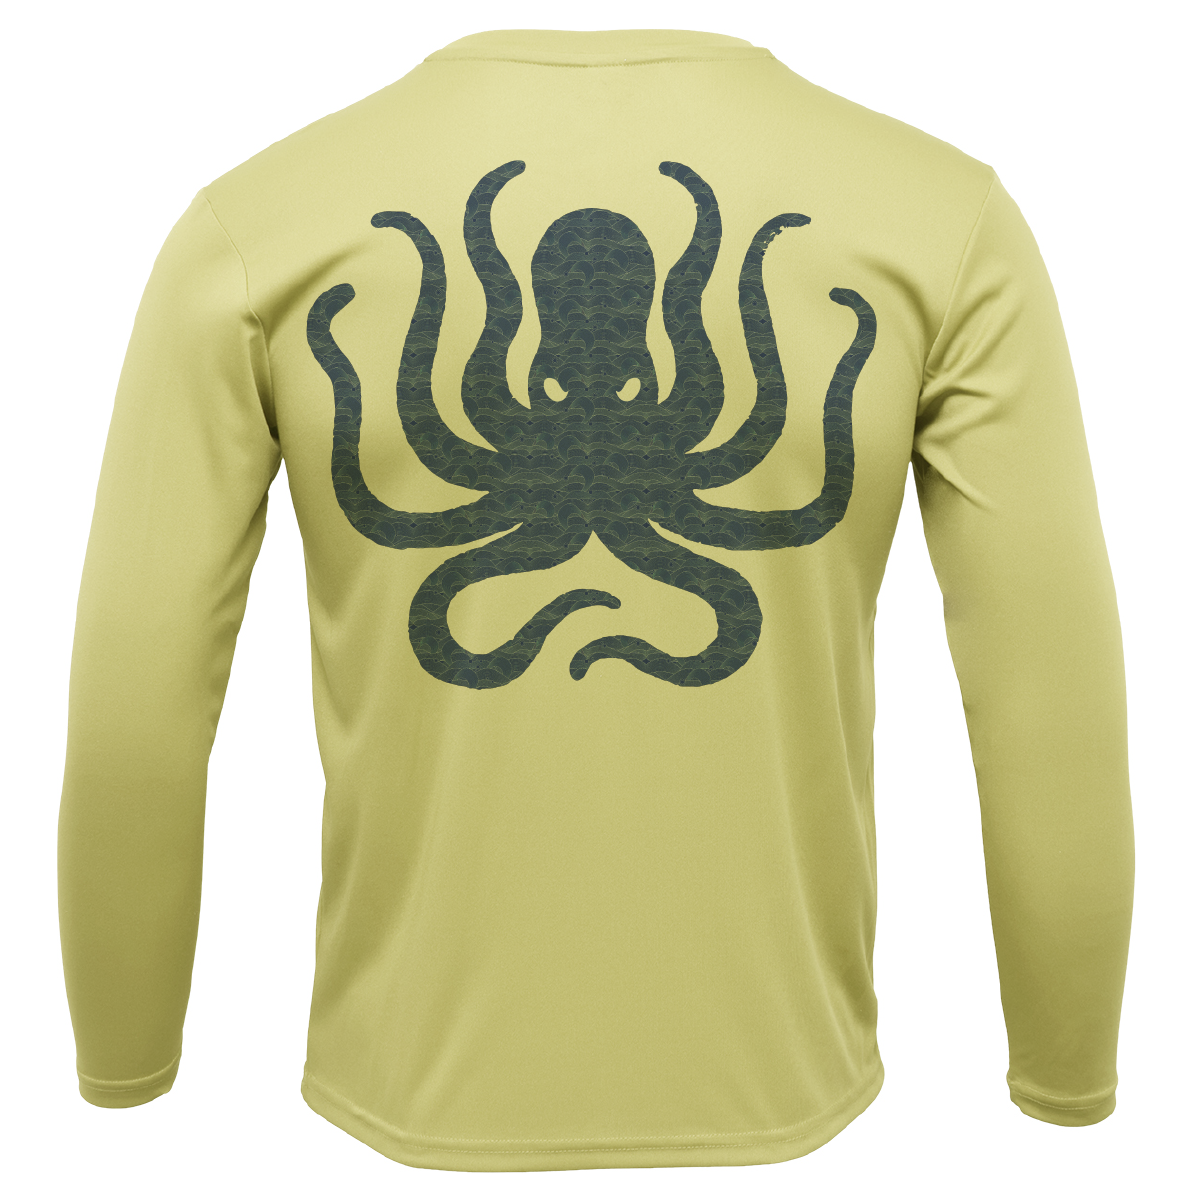 Curaçao, Netherlands Kraken Long Sleeve UPF 50+ Dry-Fit Shirt